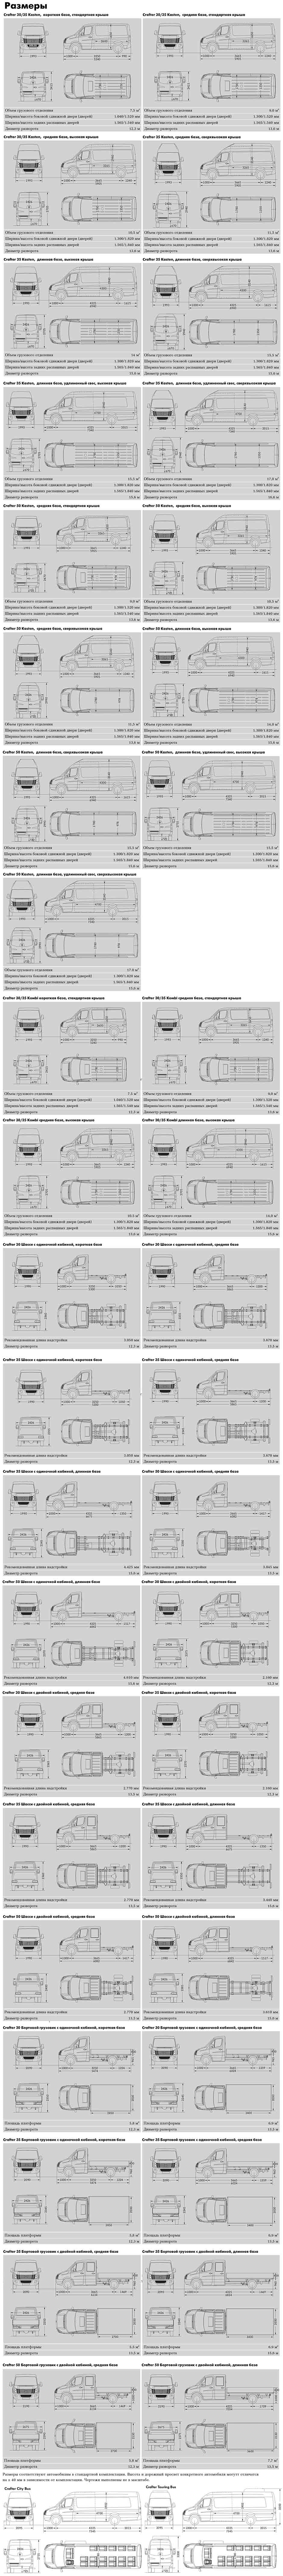 Габаритные размеры Фольксваген Крафтер (dimensions VW Crafter)